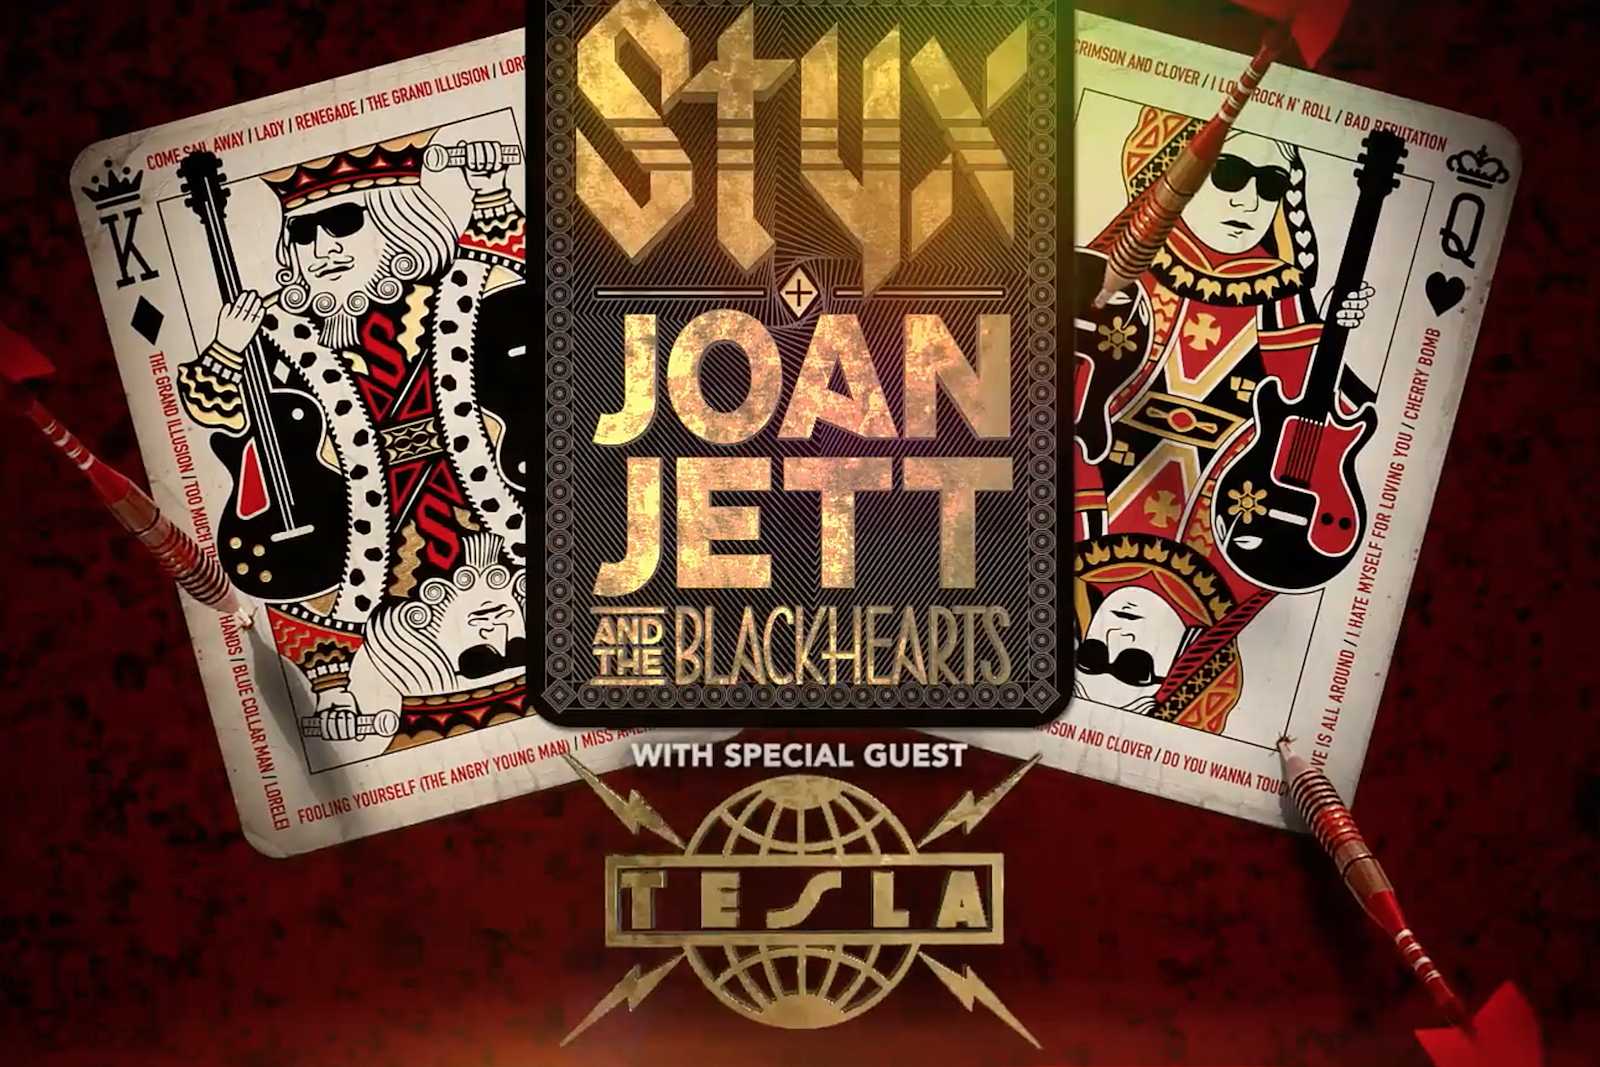 Styx, Joan Jett, The Blackhearts & Tesla